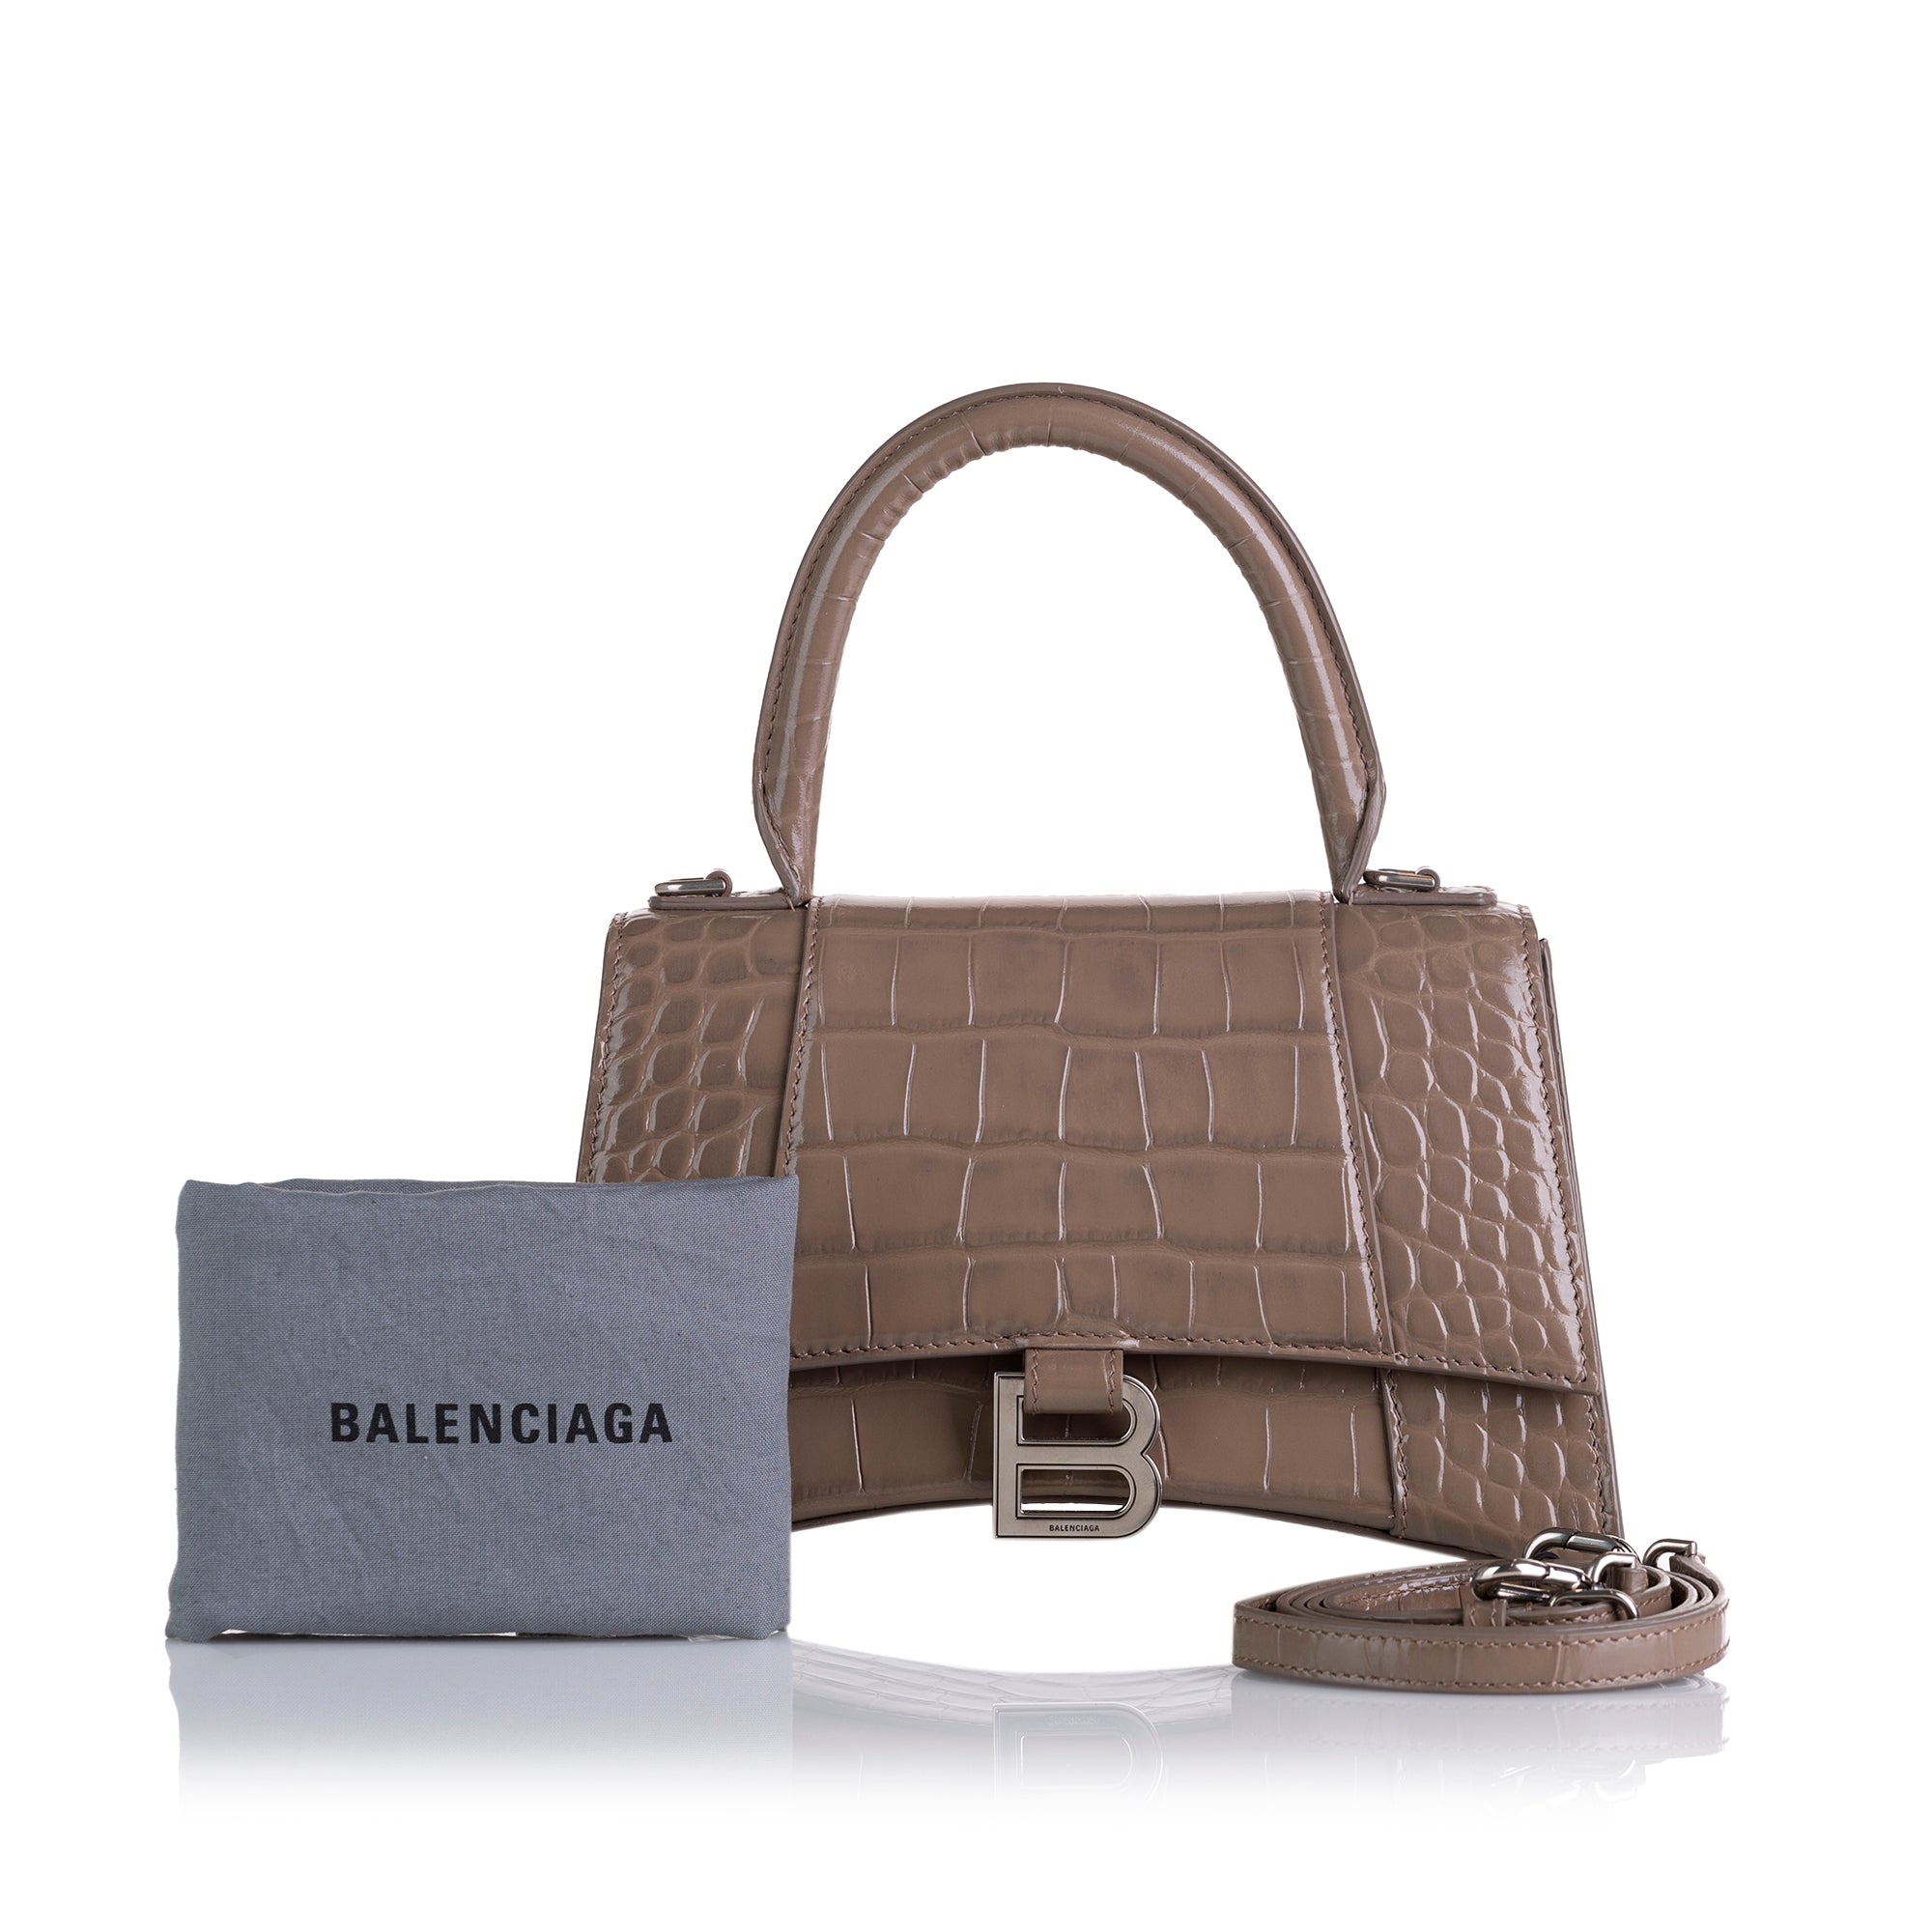 BALENCIAGA S Hourglass Top Handle Bag